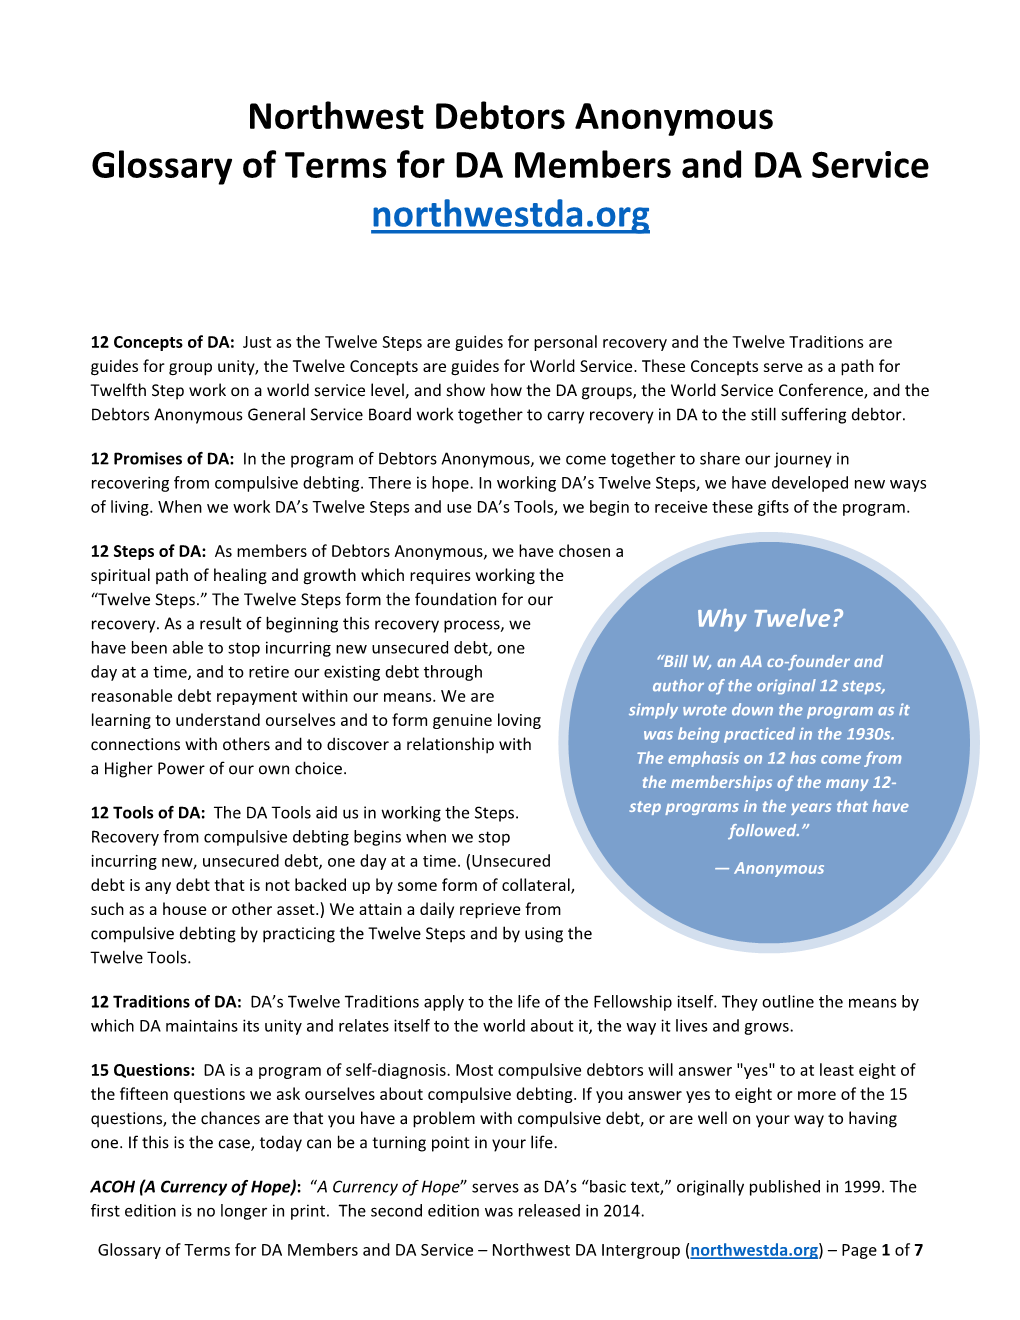 Northwest Debtors Anonymous Glossary of Terms for DA Members and DA Service Northwestda.Org